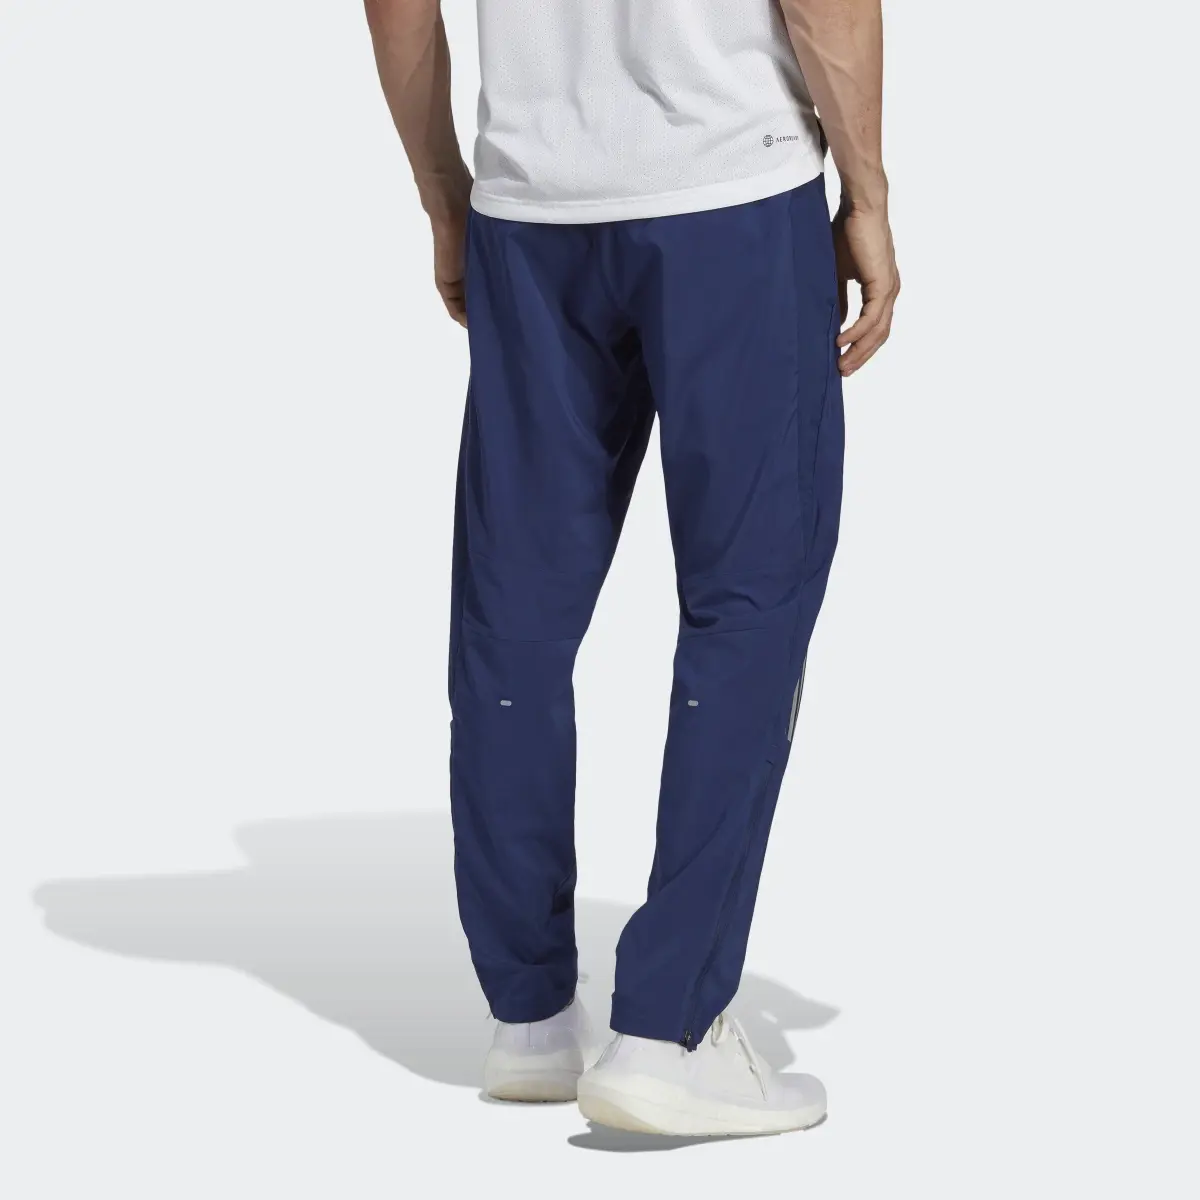 Adidas Own the Run Woven Astro Pants. 2